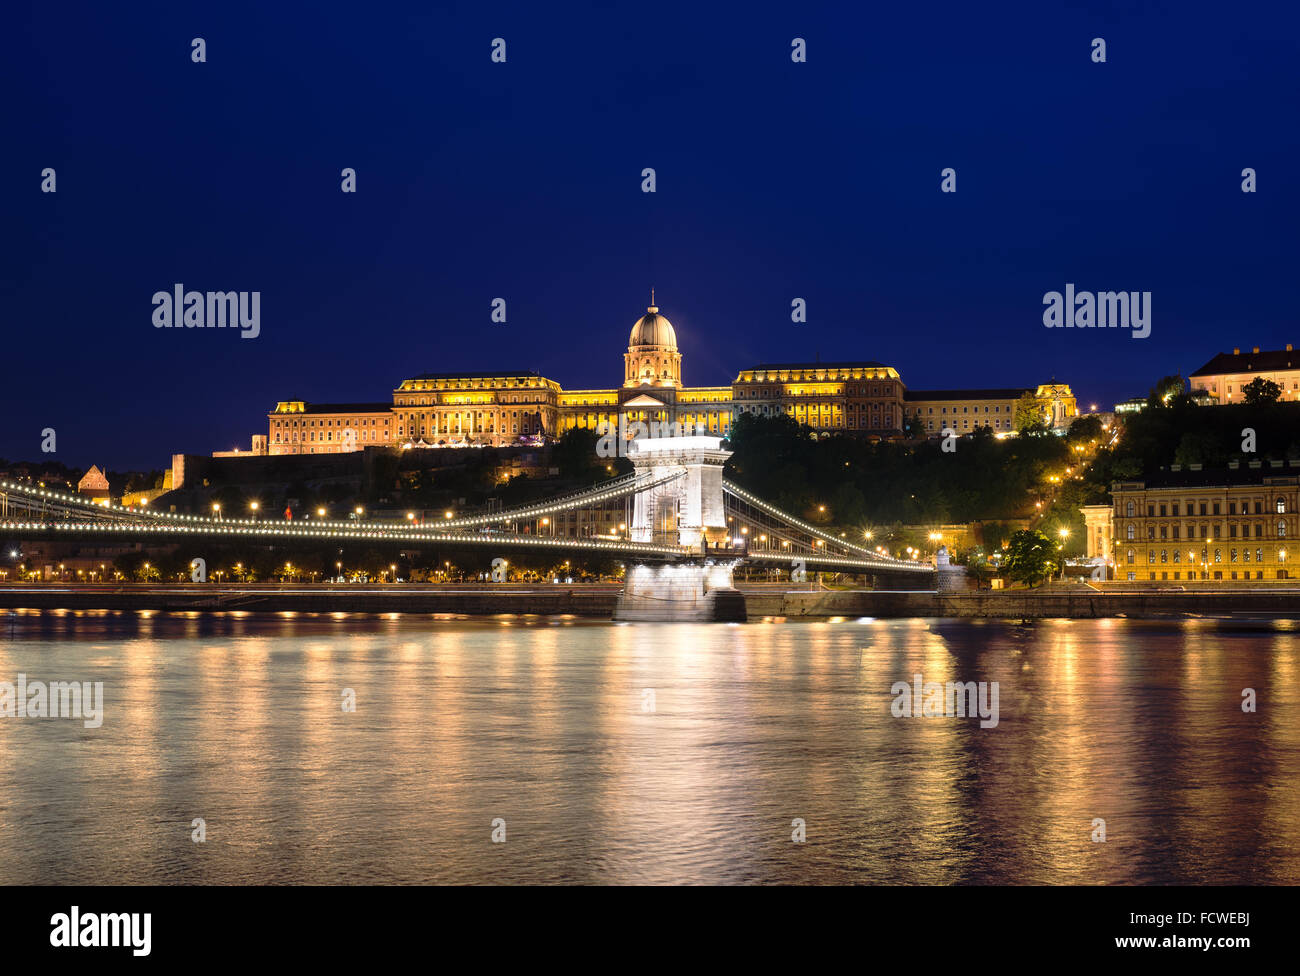 Danube river, Chain Bridge and Buda Castle (Royal Palace) at night. Budapest, Hungary. Stock Photo